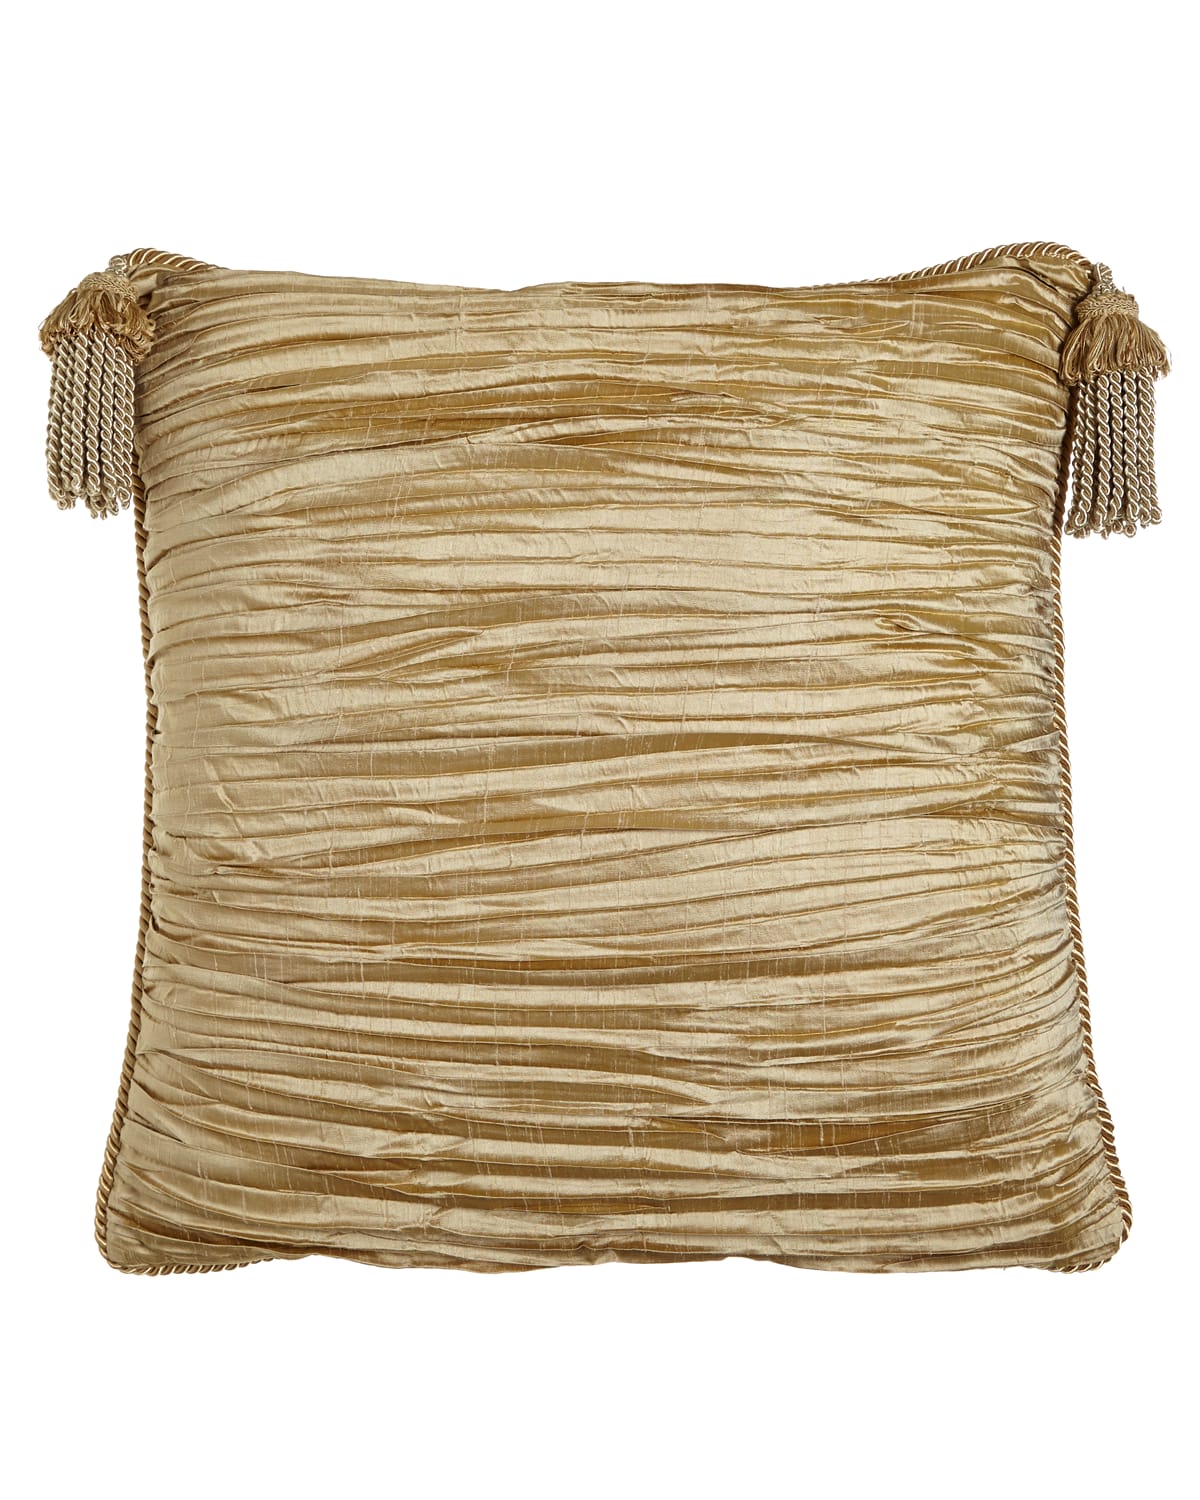 Austin Horn Collection Antoinette Pleated Silk European Sham With Tassels